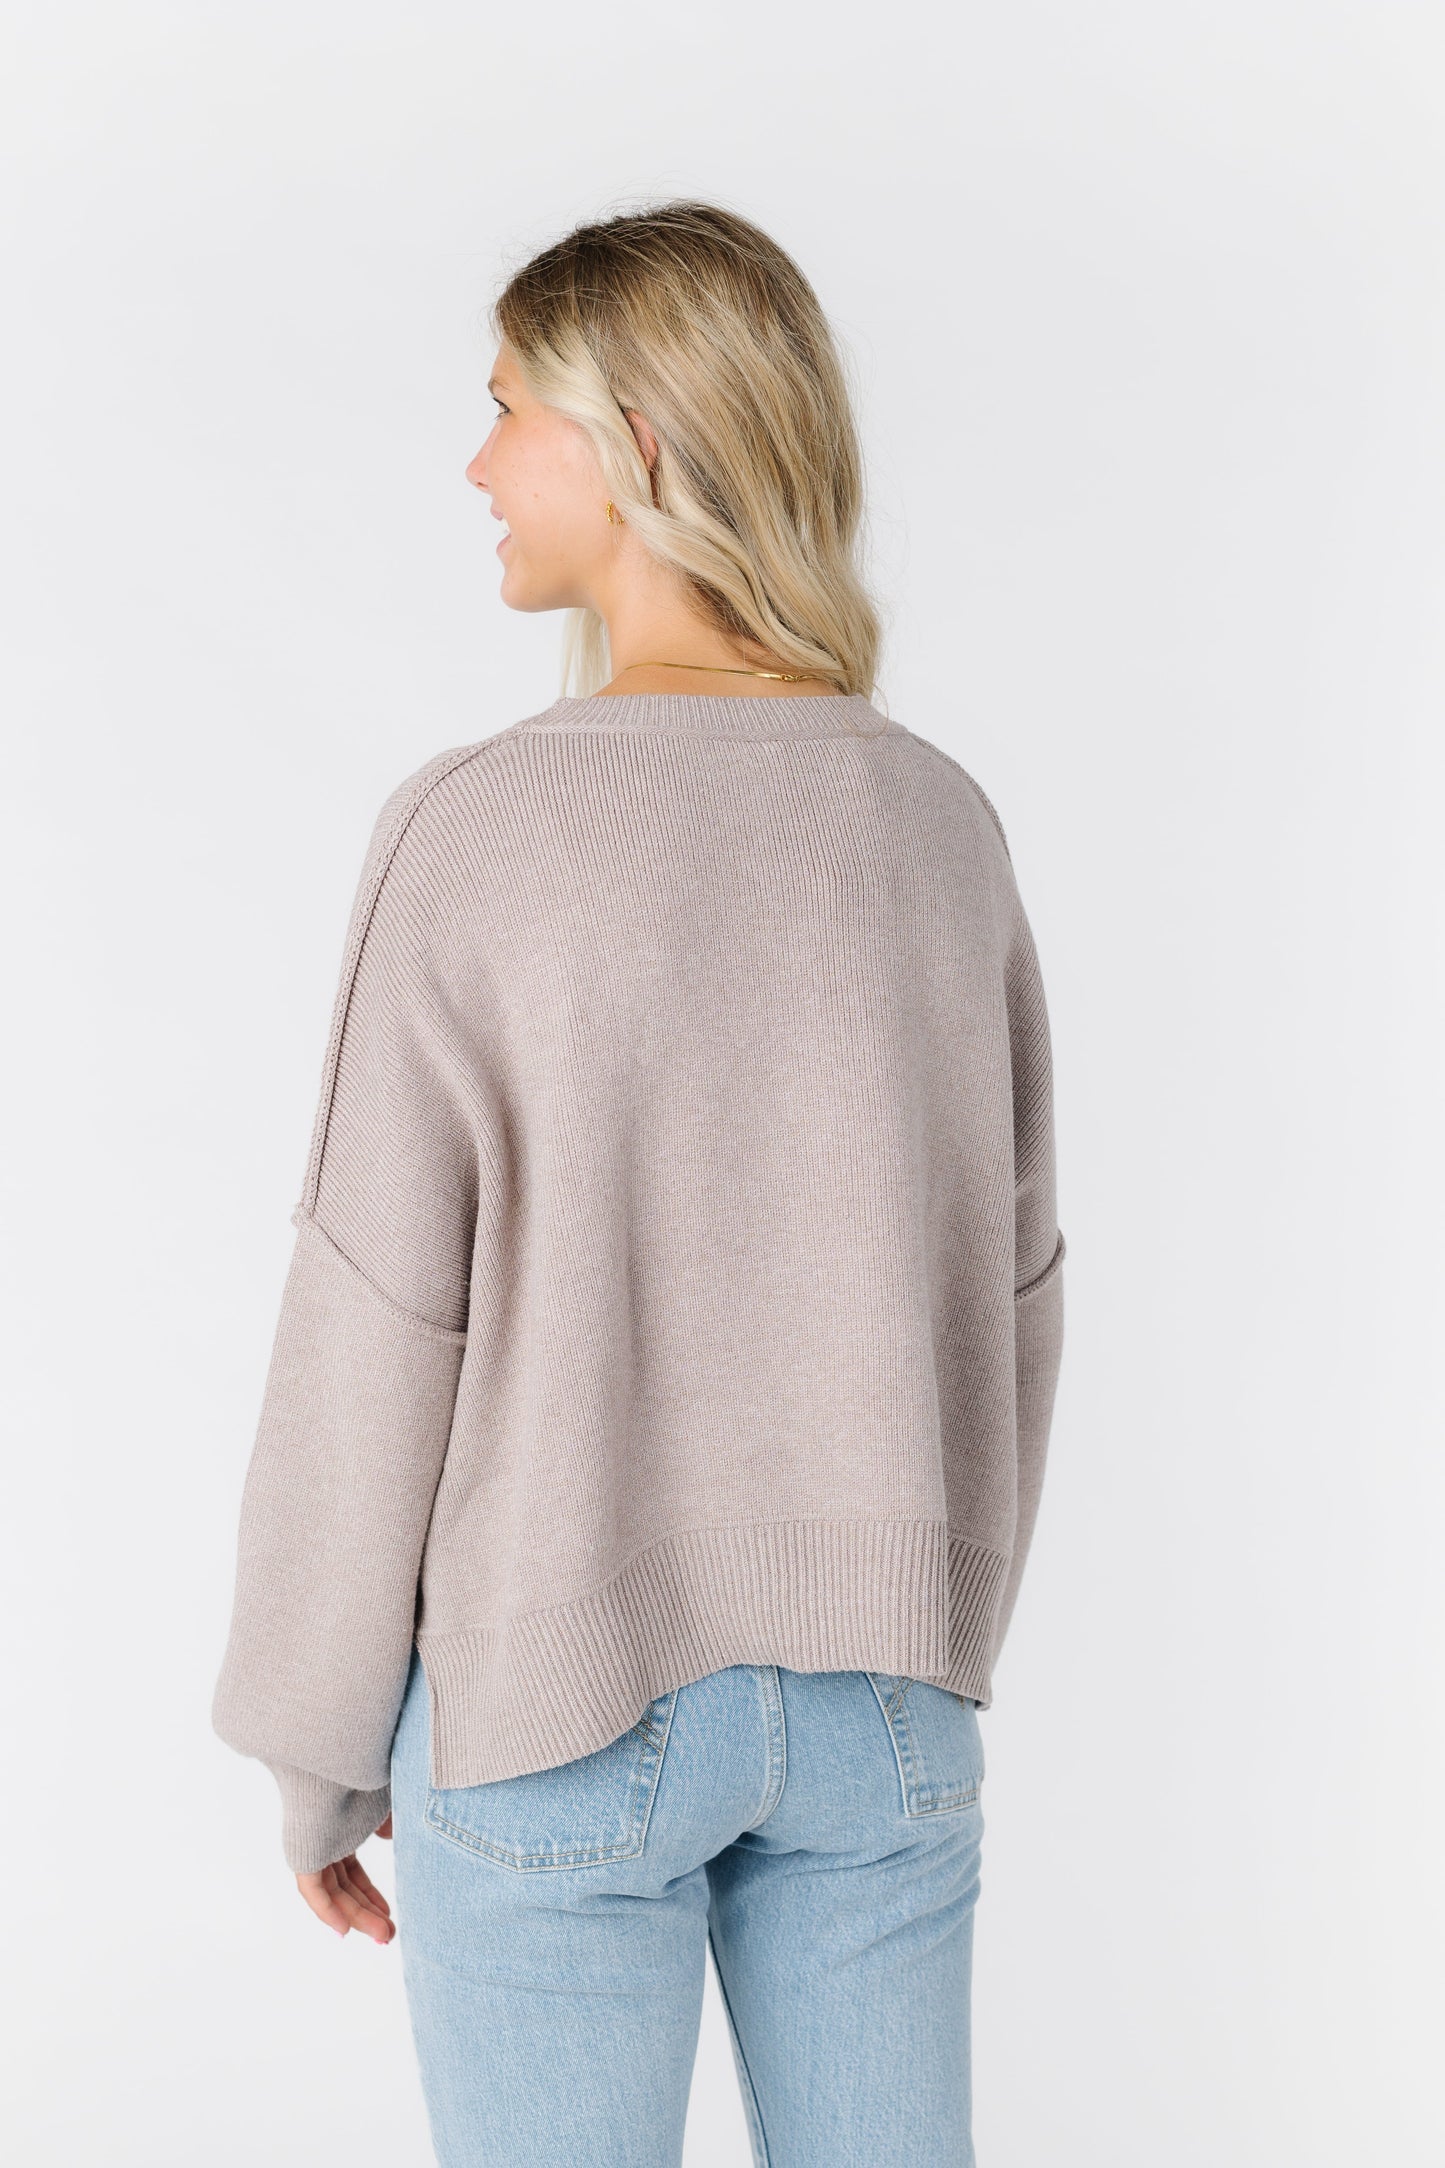 Sweater Time Sweater WOMEN'S SWEATERS Wishlist 